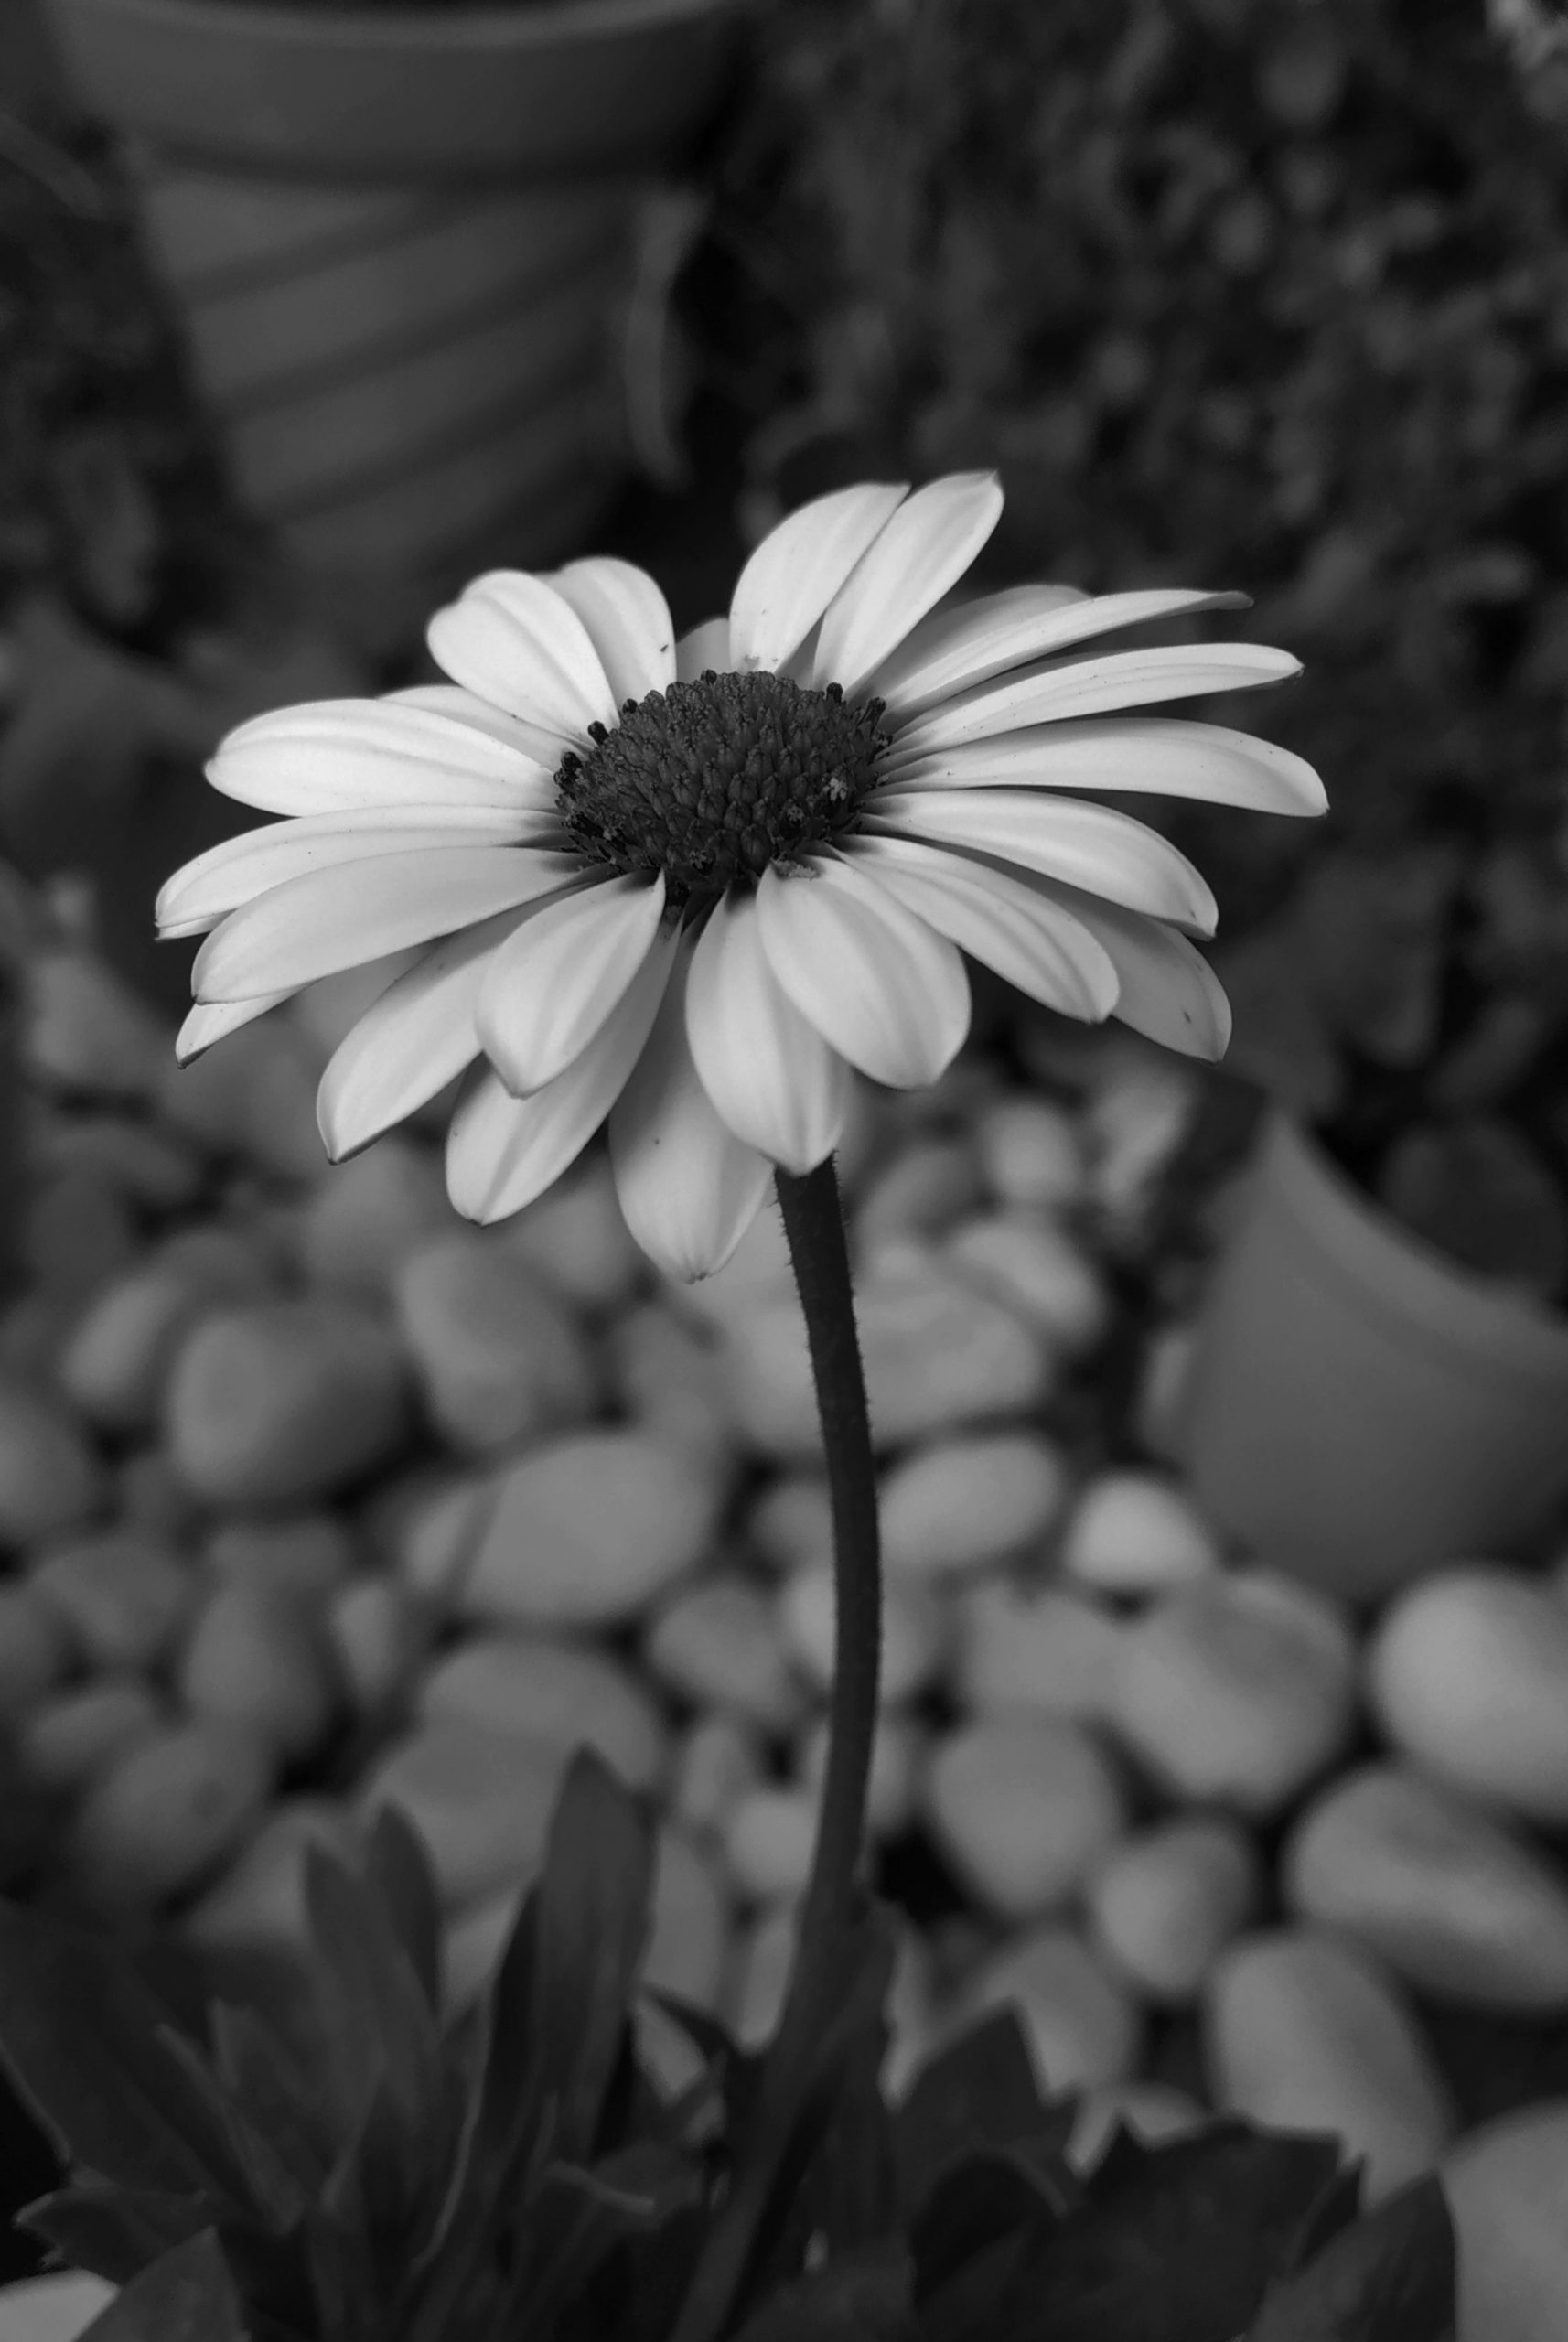 Daisy flower portrait